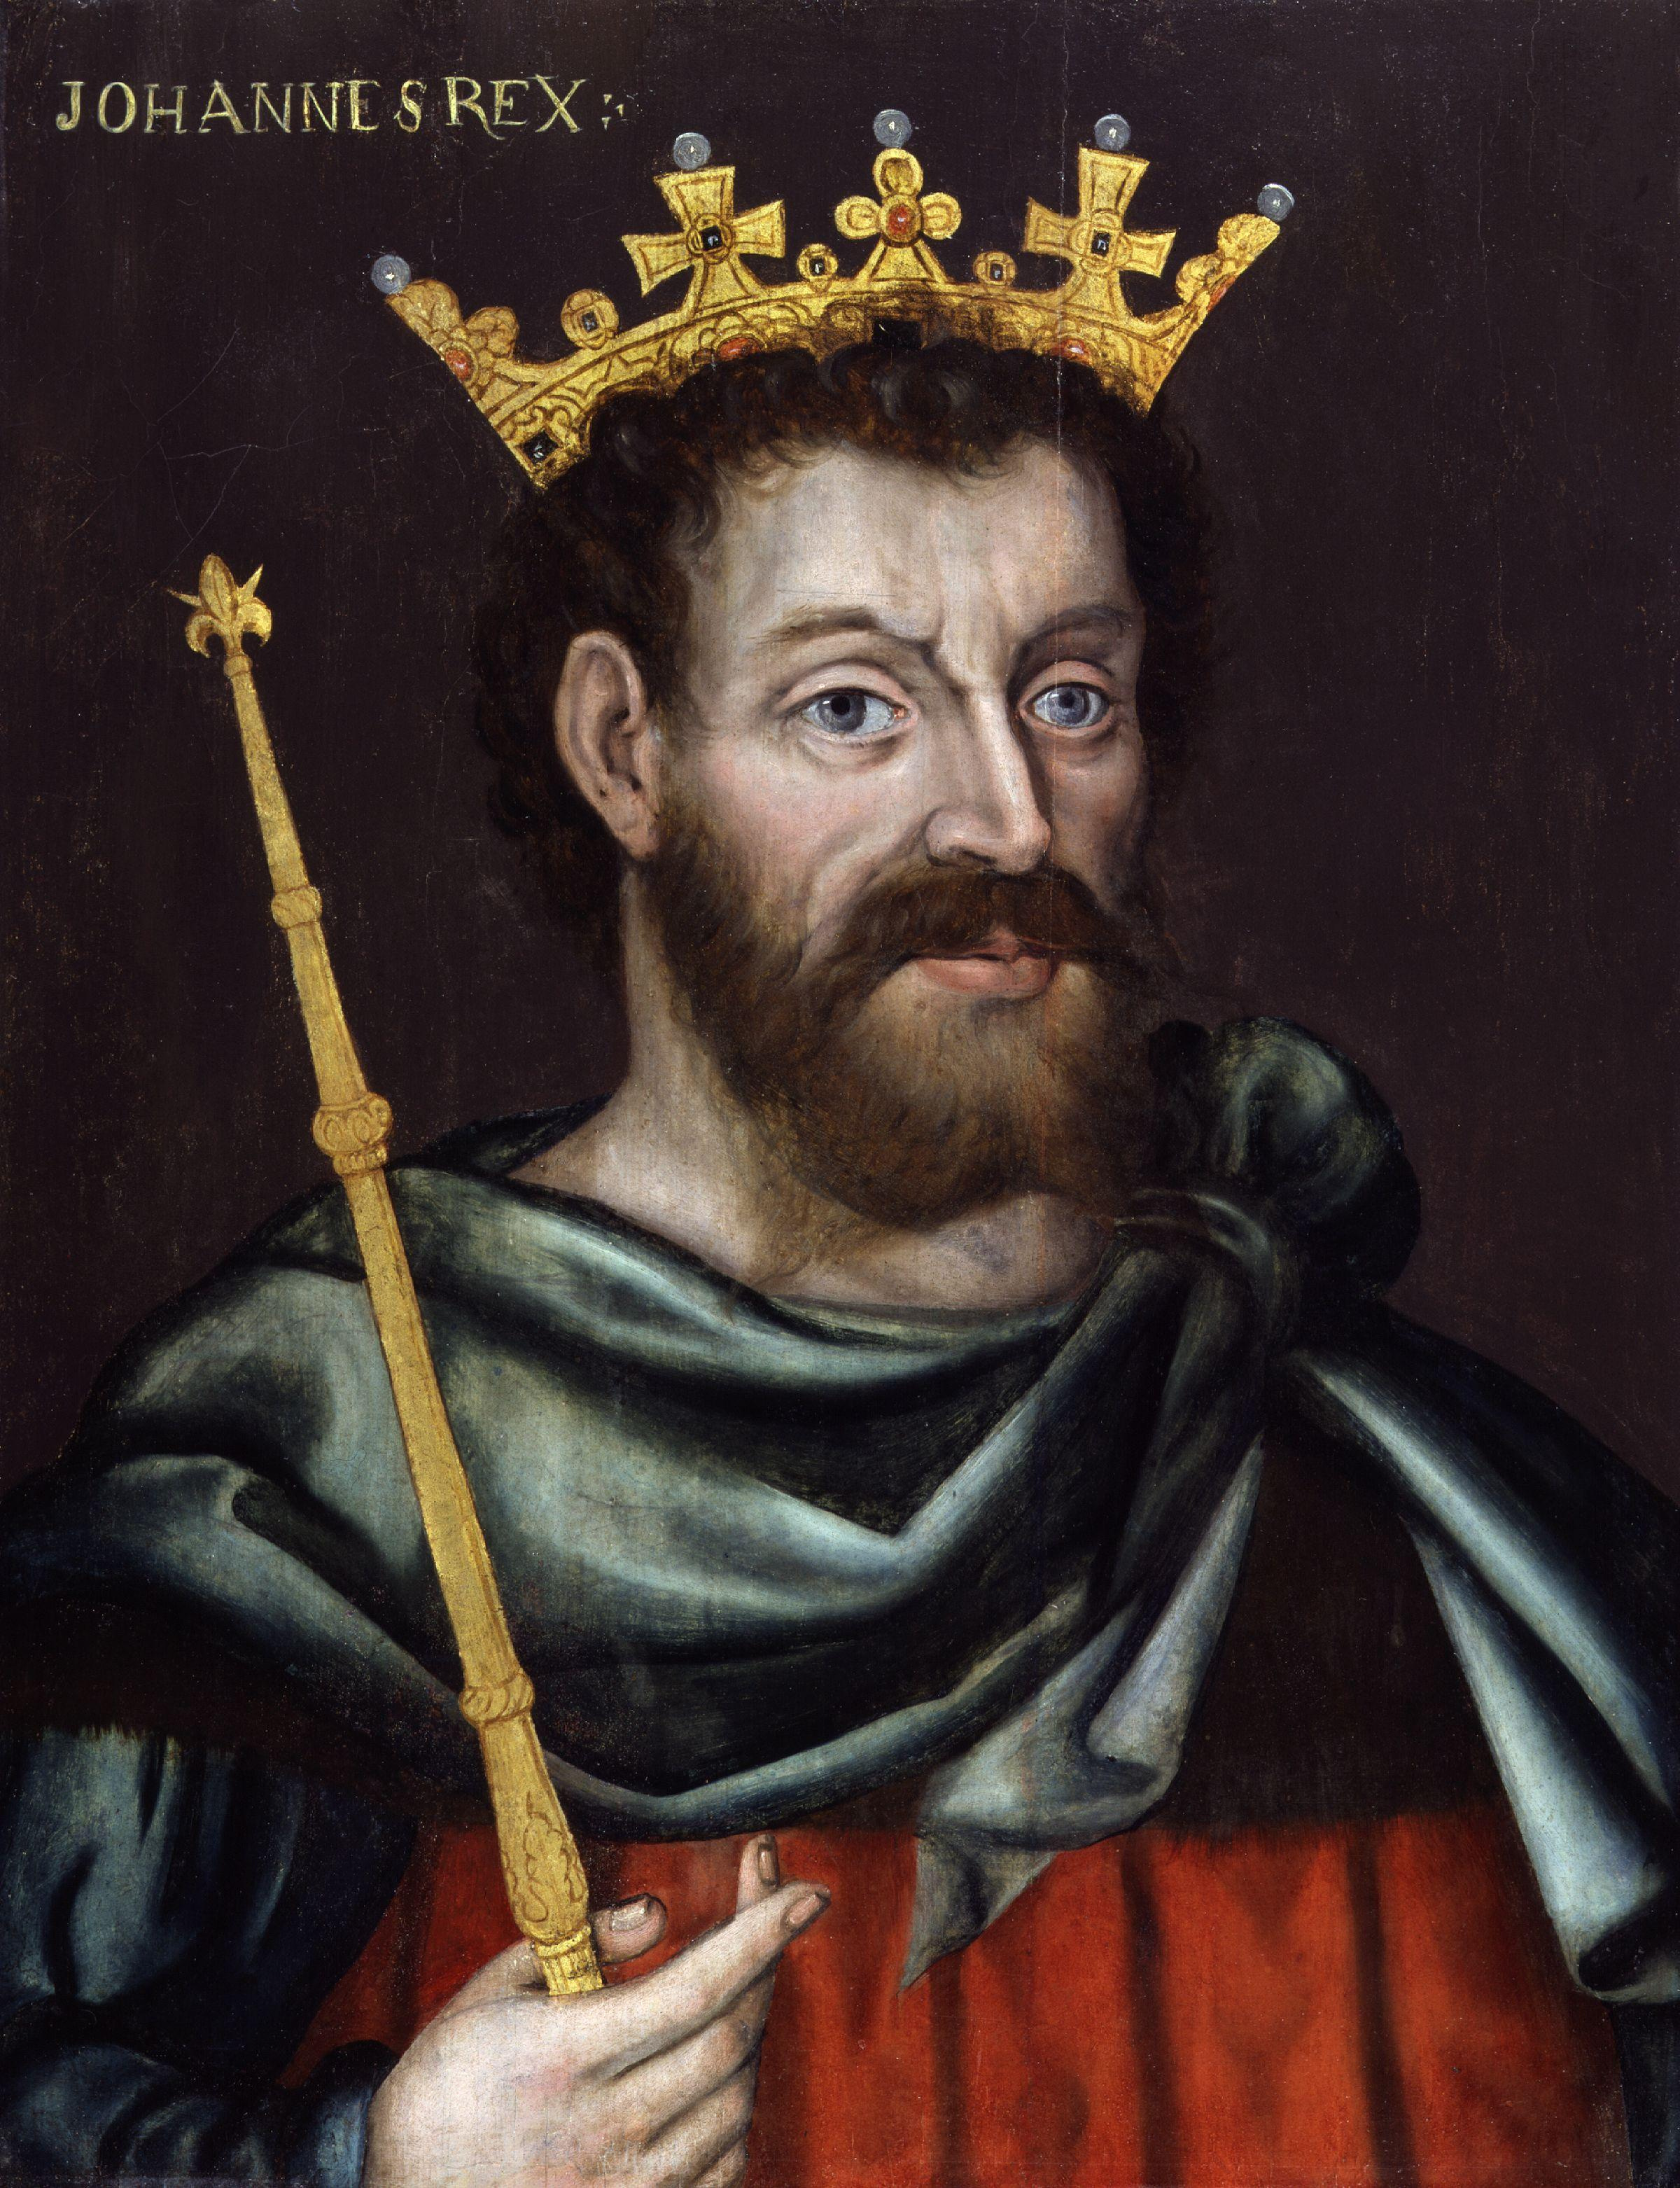 Was King John really that bad?